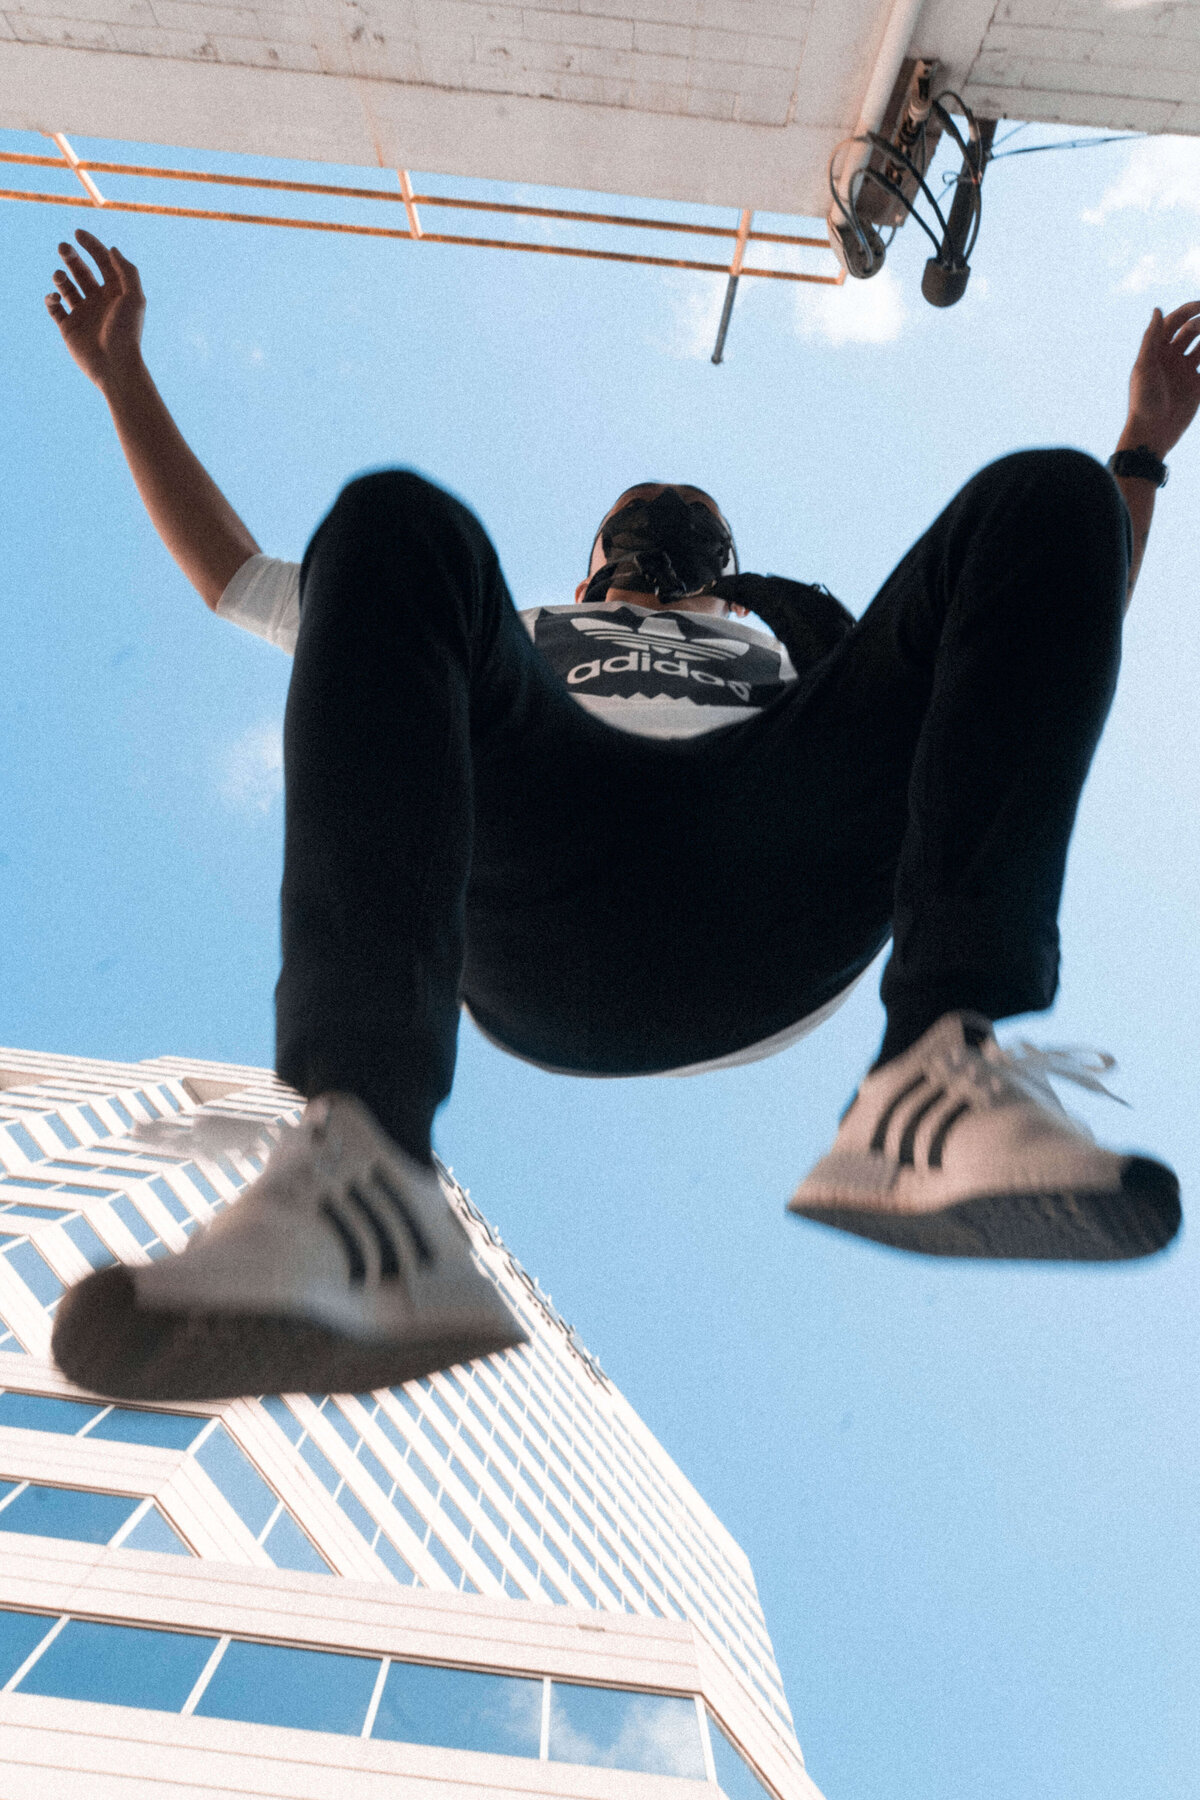 Adidas model jumping over the camera in Charlotte, North Carolina